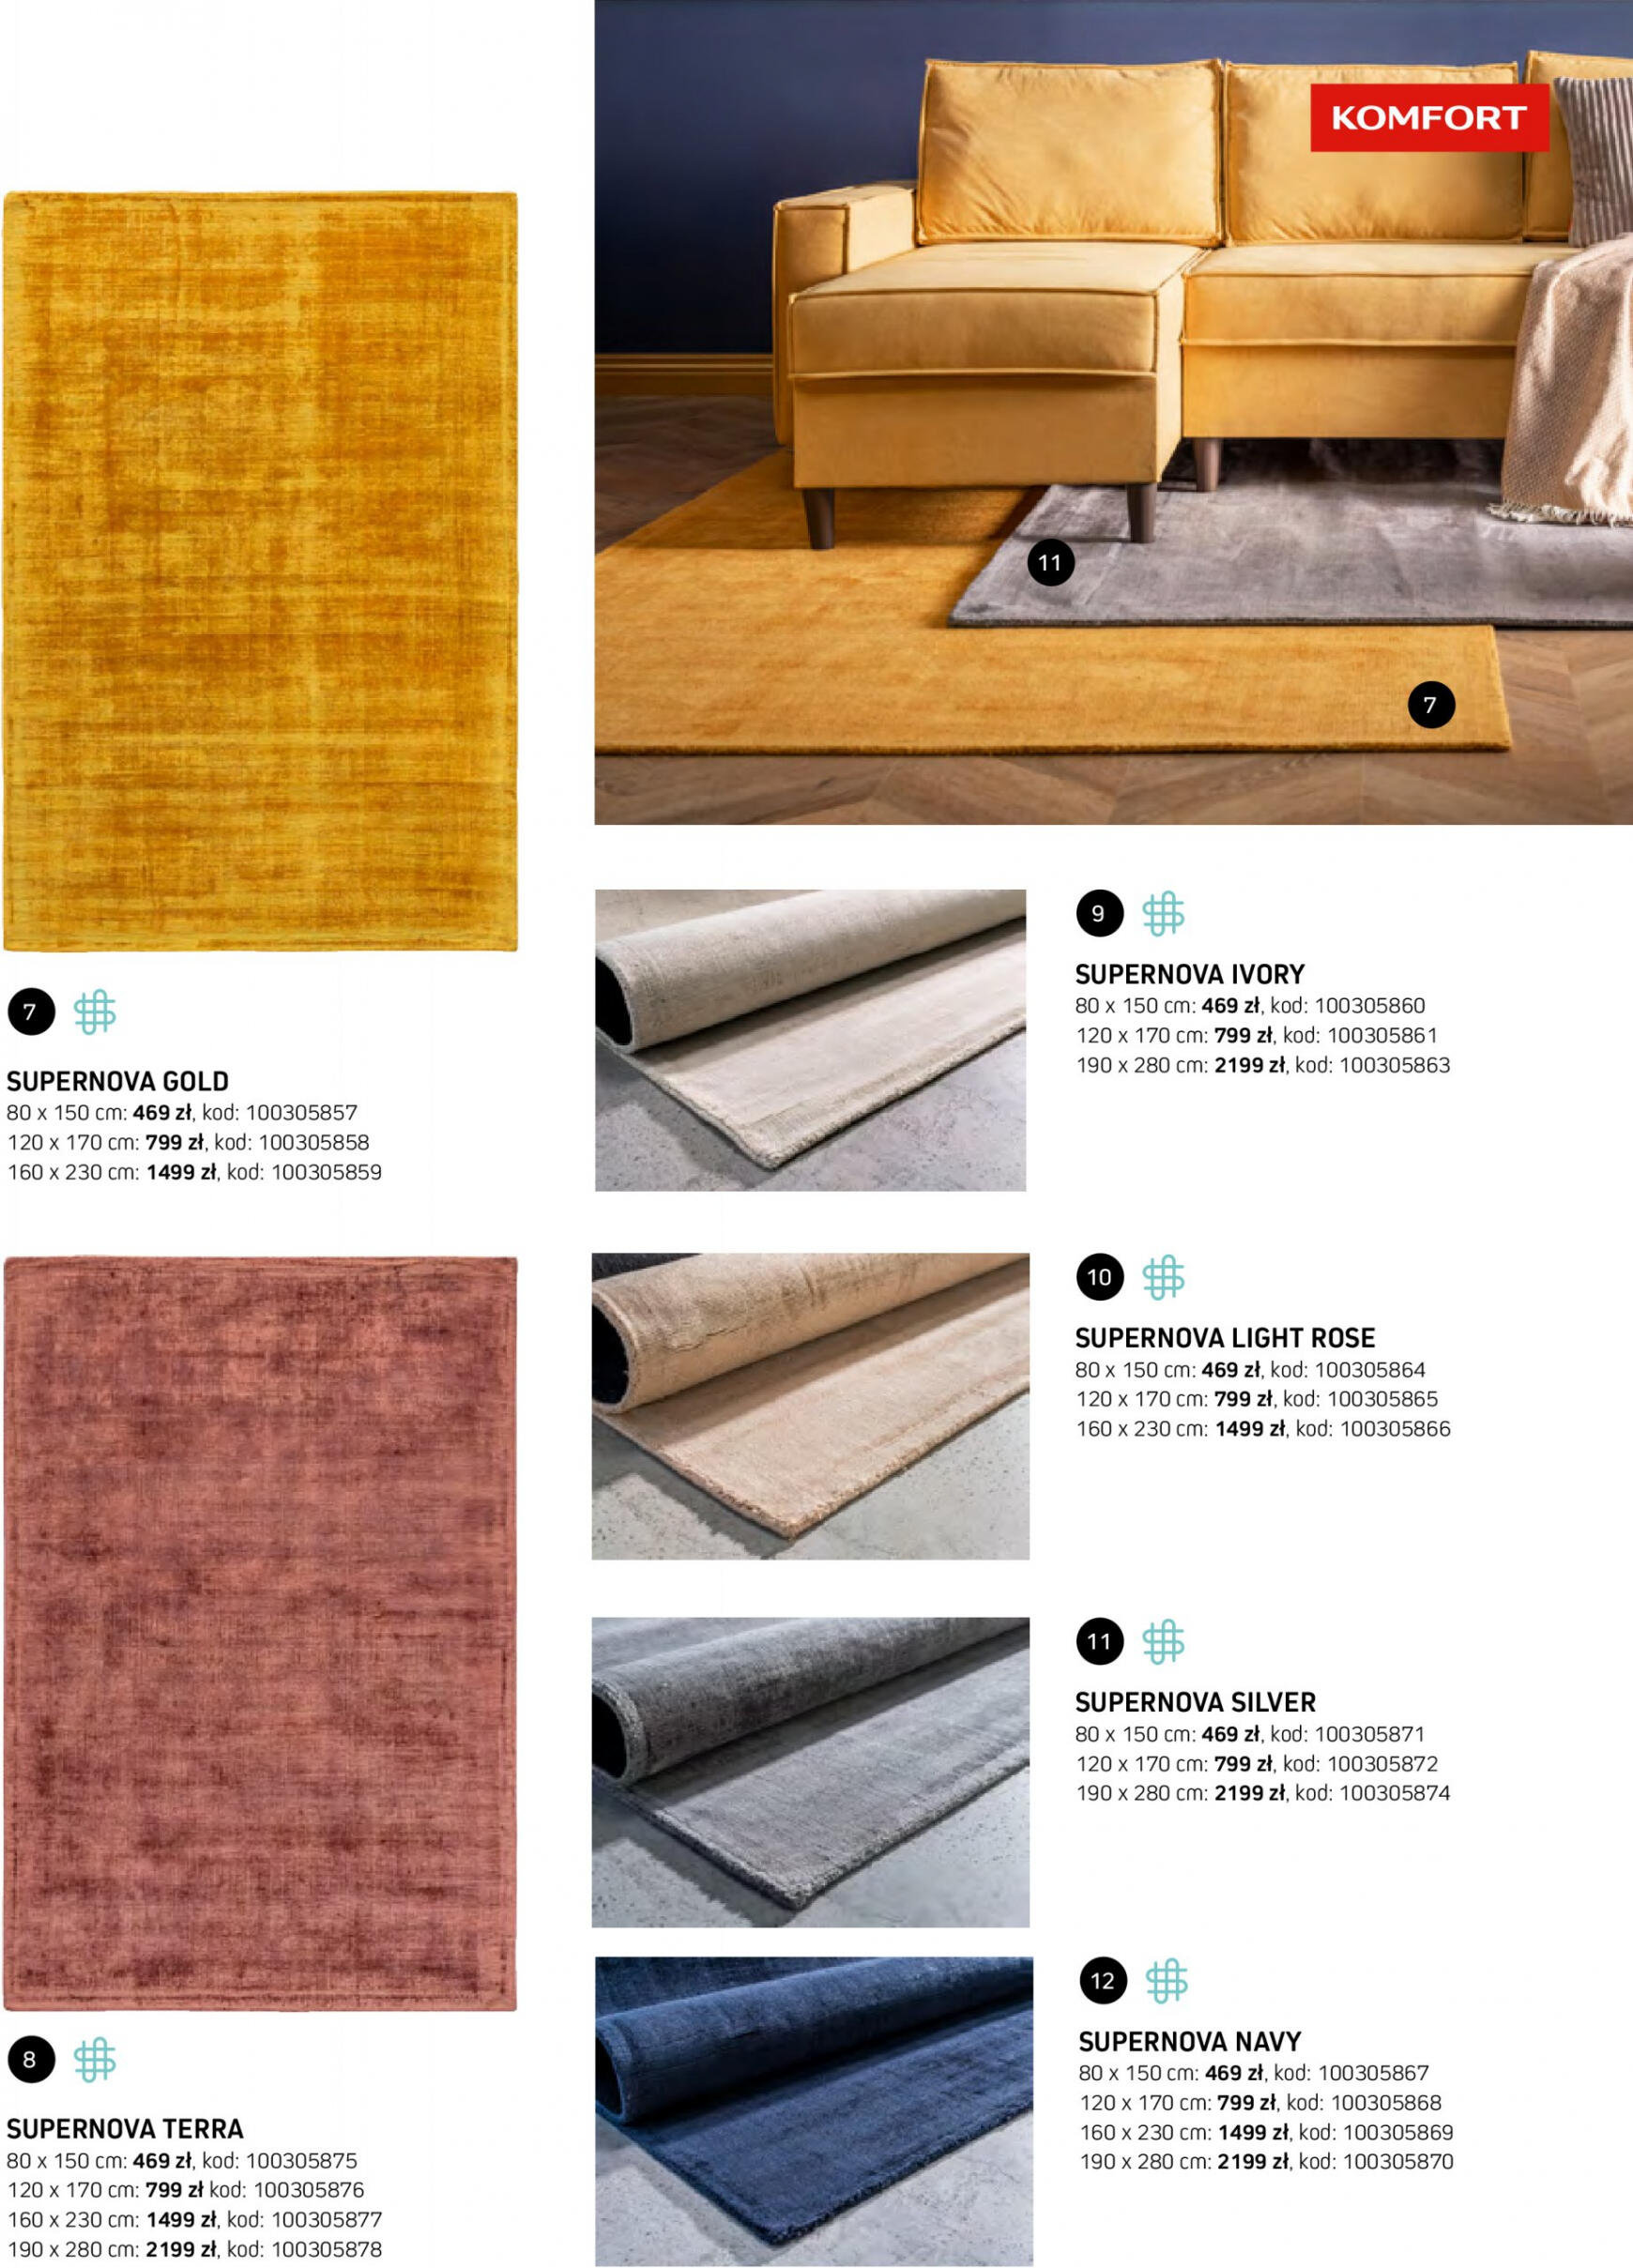 komfort - Komfort - Katalog dywany 2 - page: 41